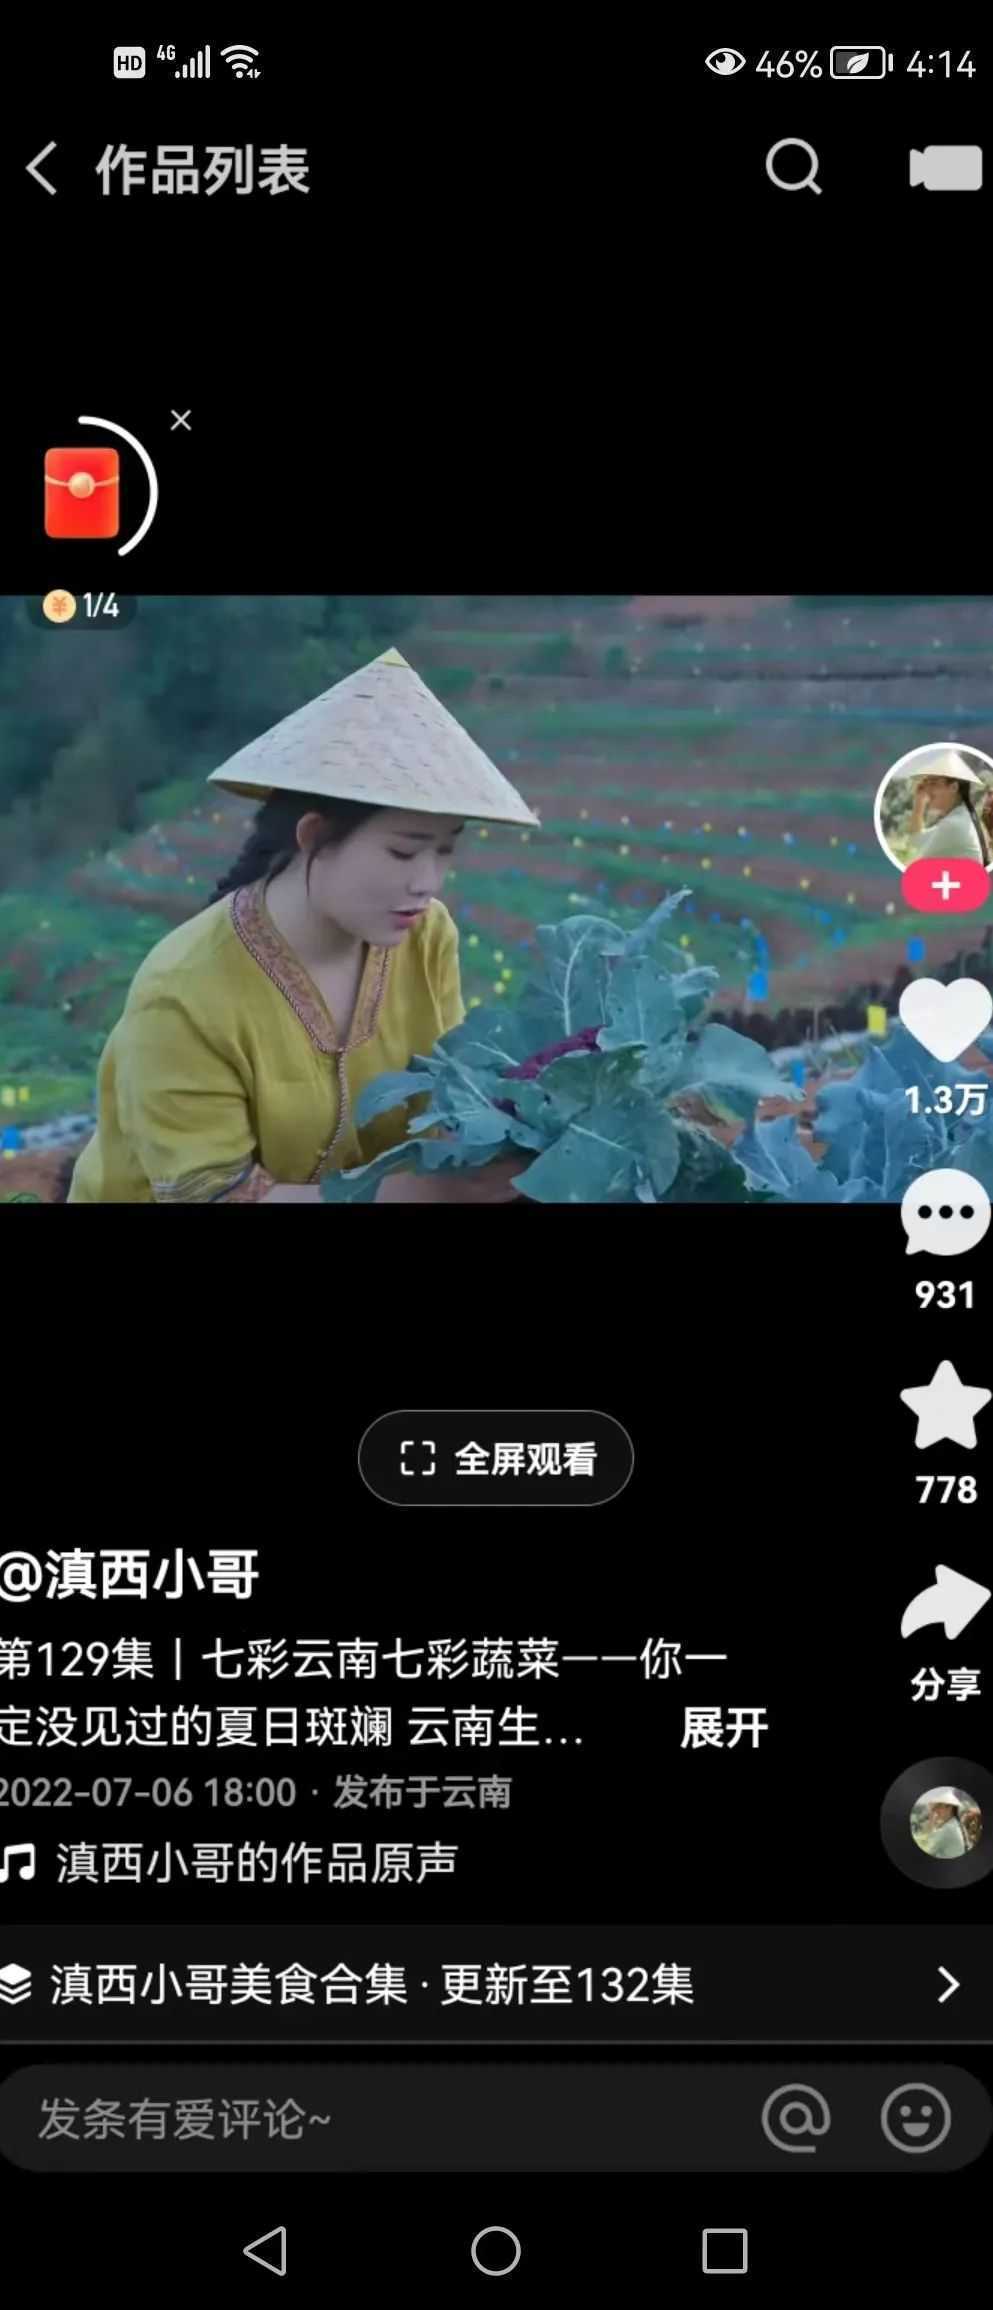 <a href='https://www.zhouxiaohui.cn/duanshipin/
' target='_blank'>短视频</a>美食的尽头竟然是“乡村自制”？-第14张图片-周小辉博客